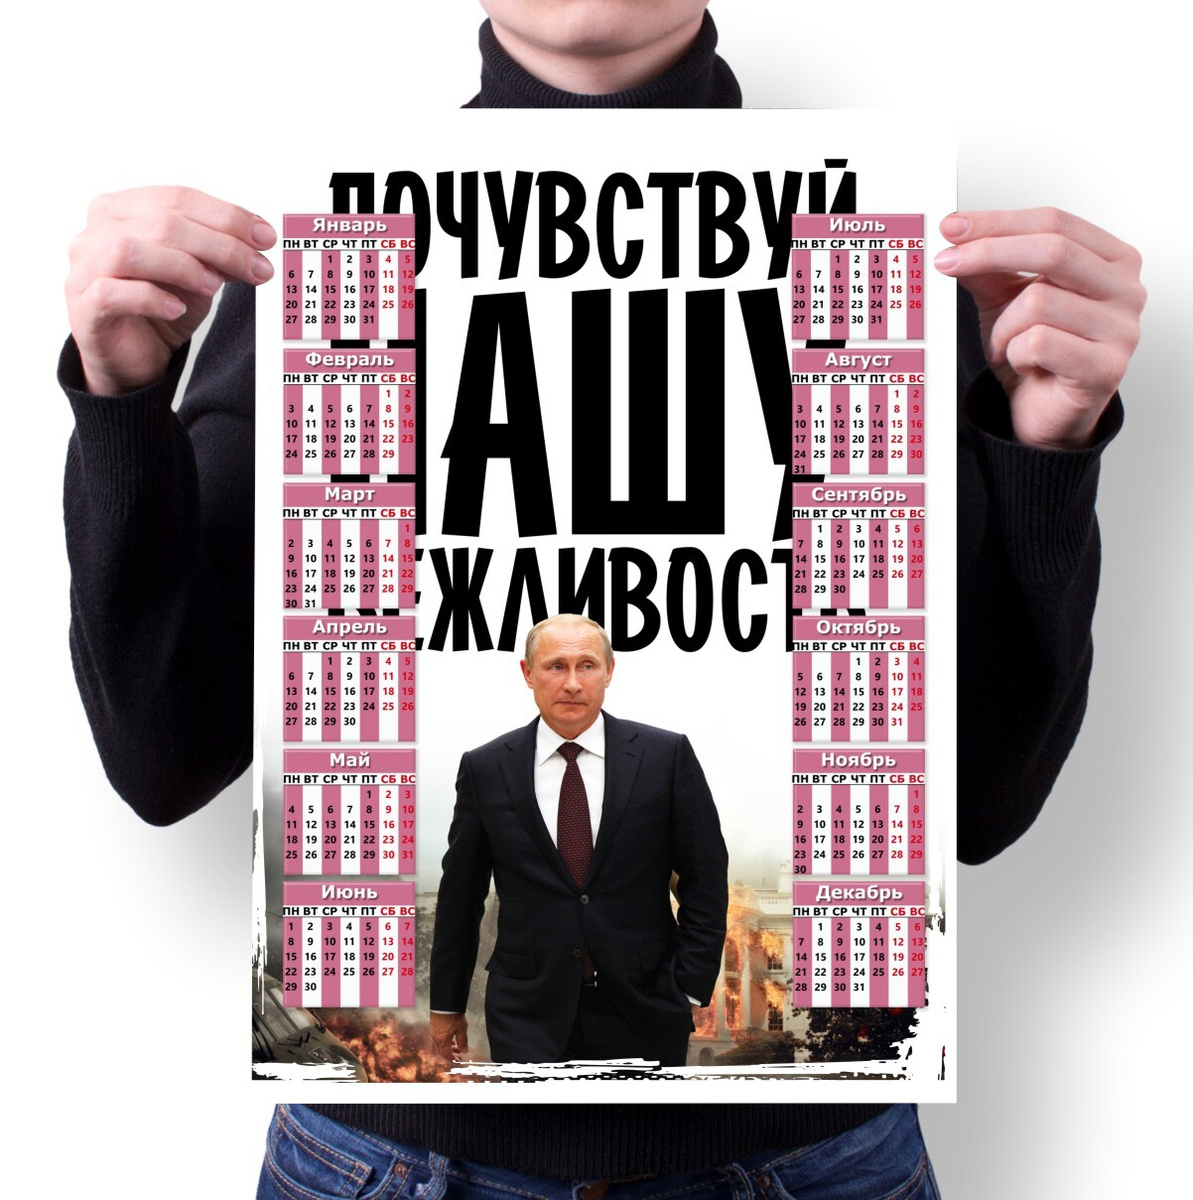 Путин Фото А3